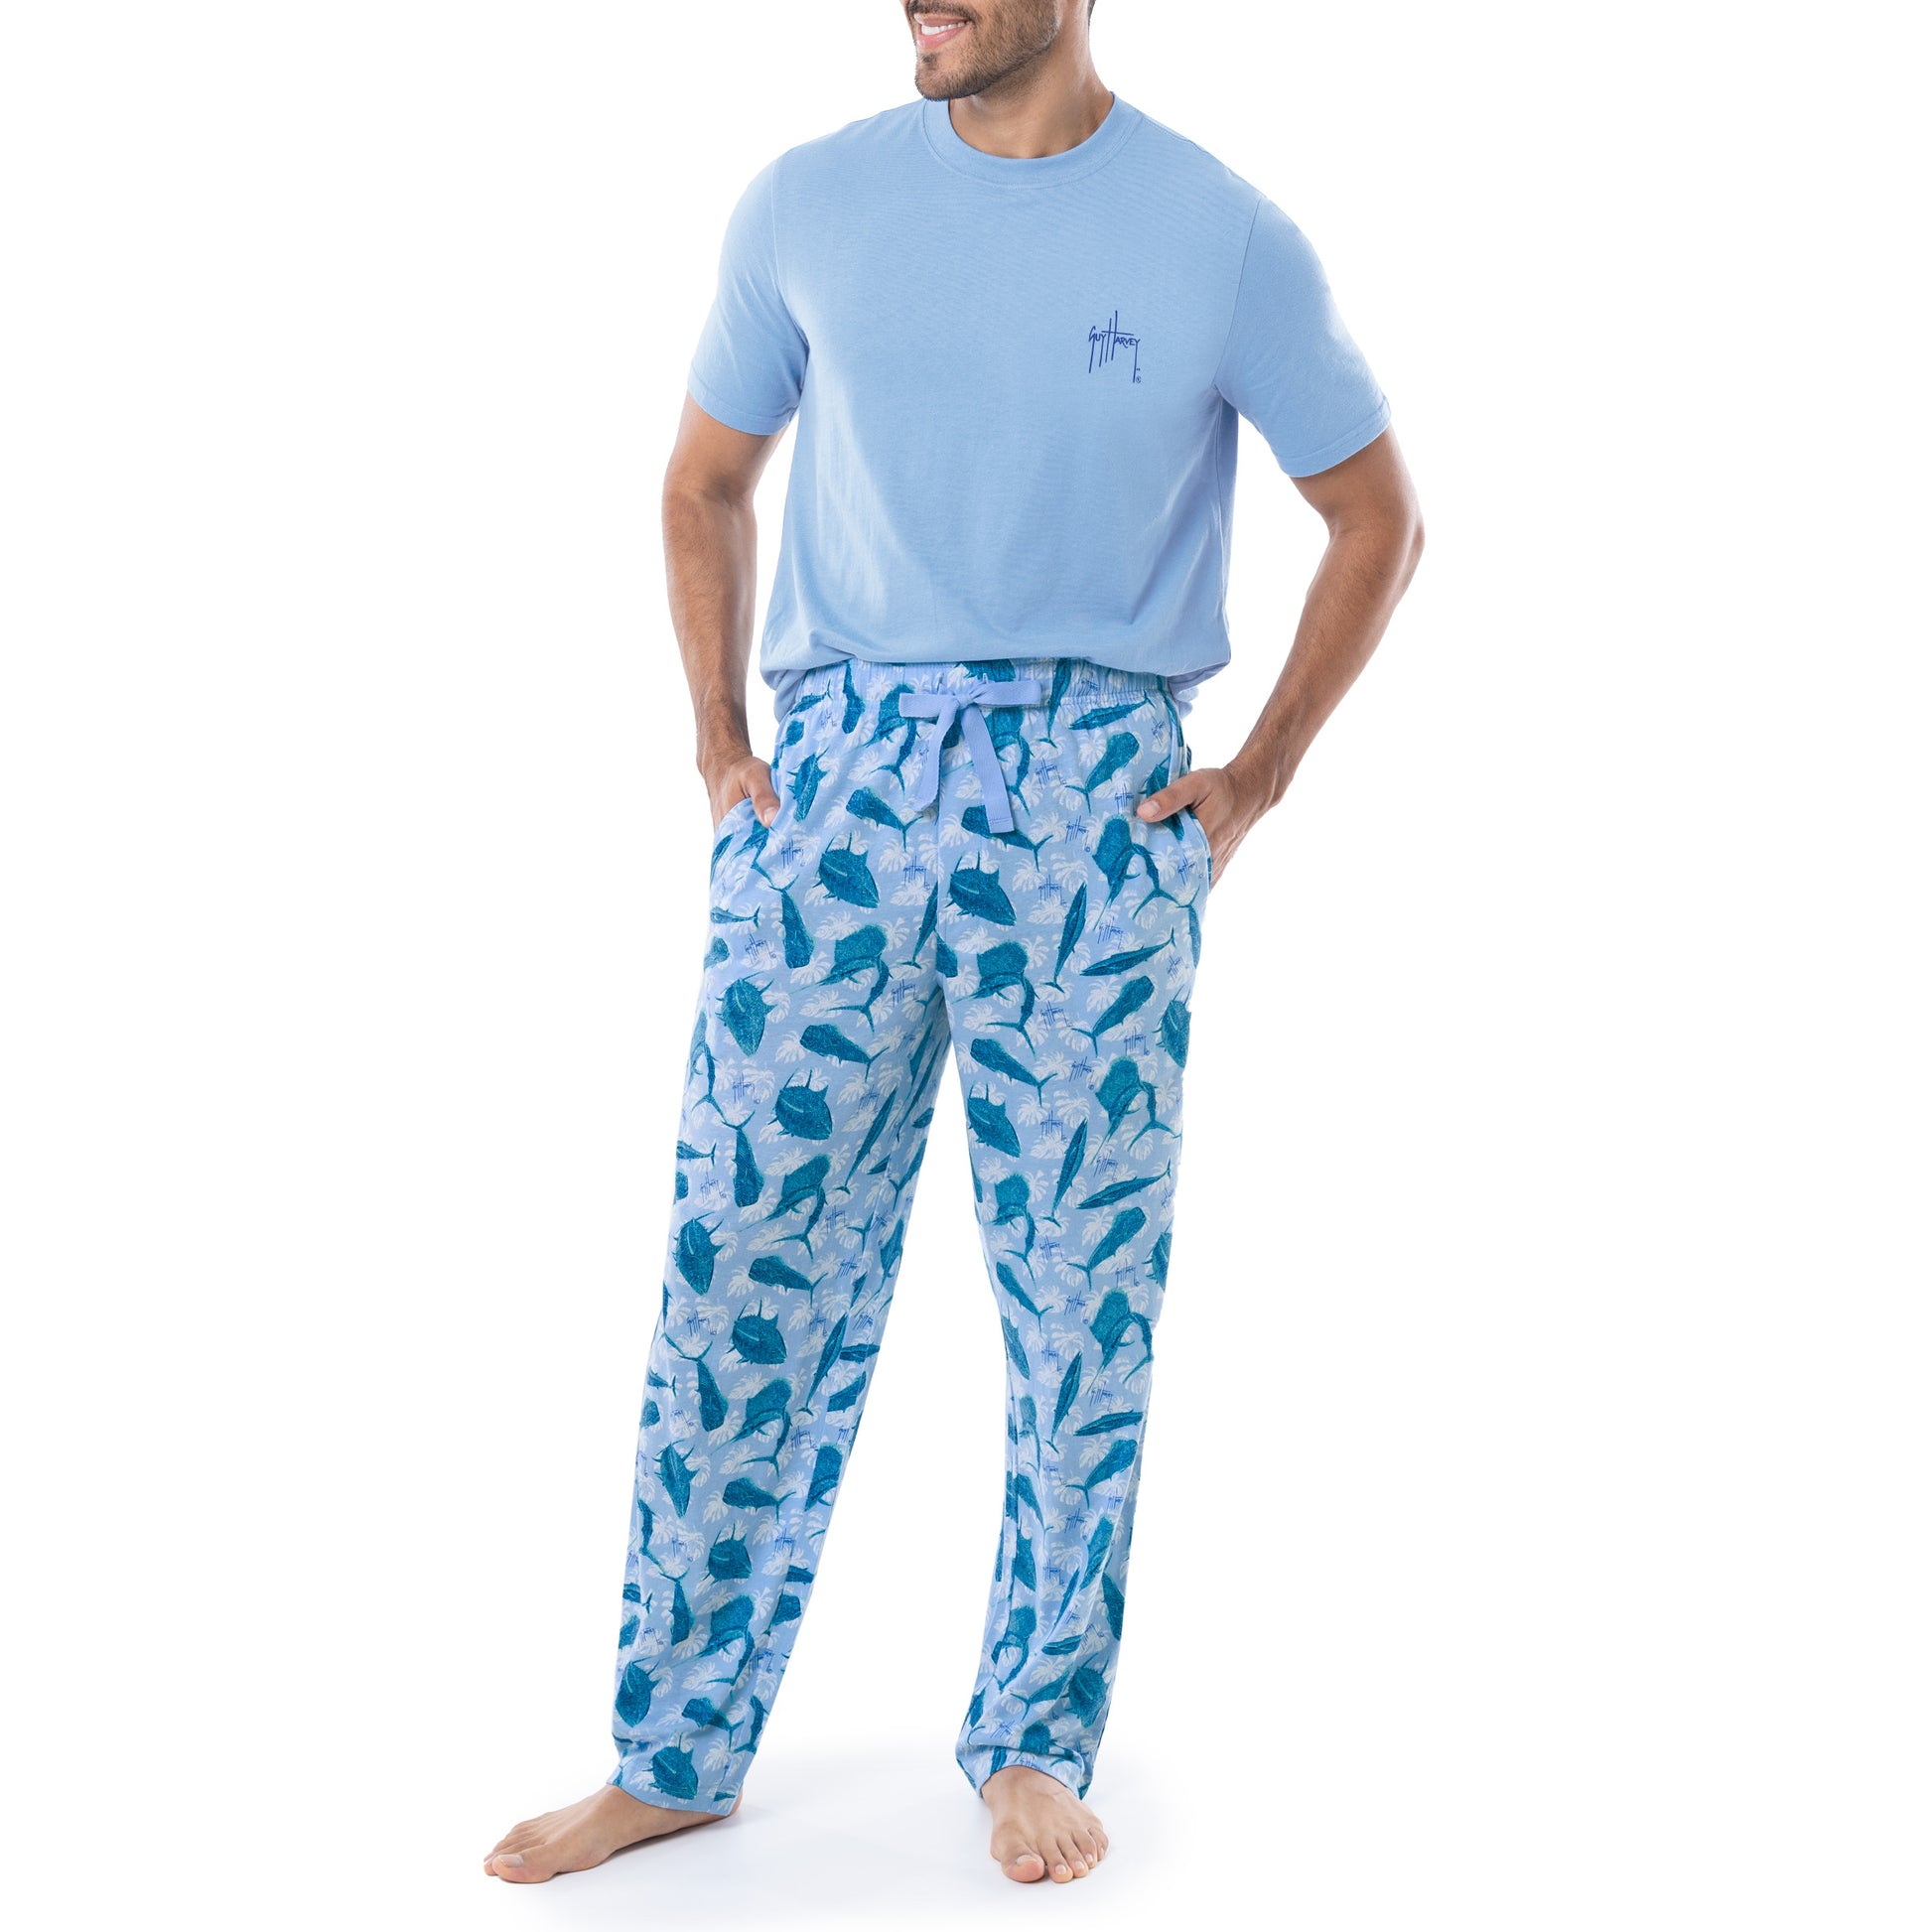 2 Mens Pyjama Bottoms 100% Cotton Woven Check Lounge Pant pj